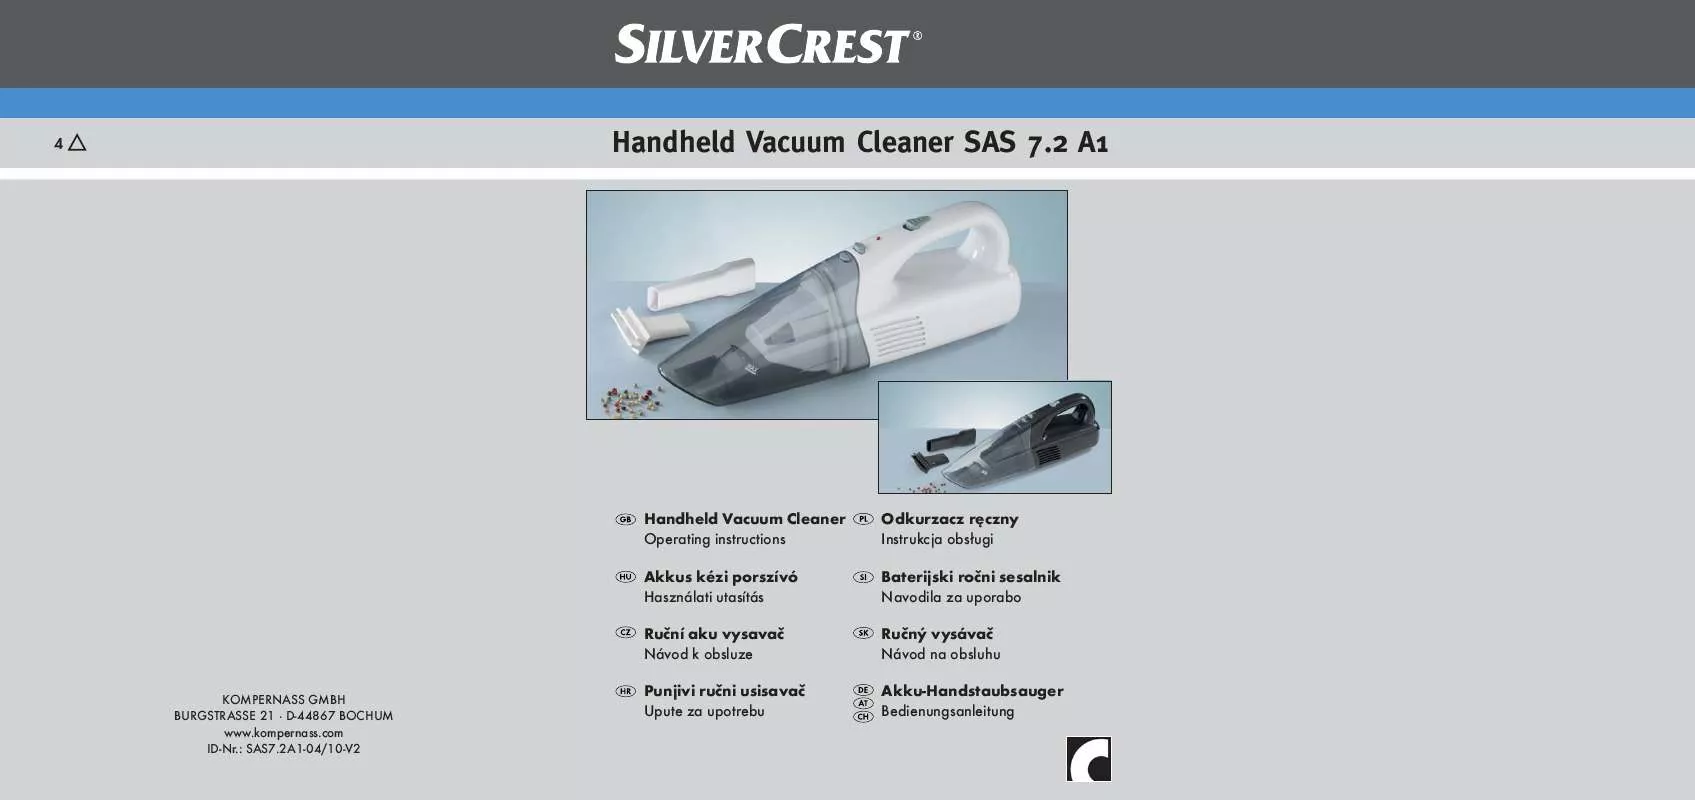 Mode d'emploi SILVERCREST SAS 7.2 A1 HANDHELD VACUUM CLEANER